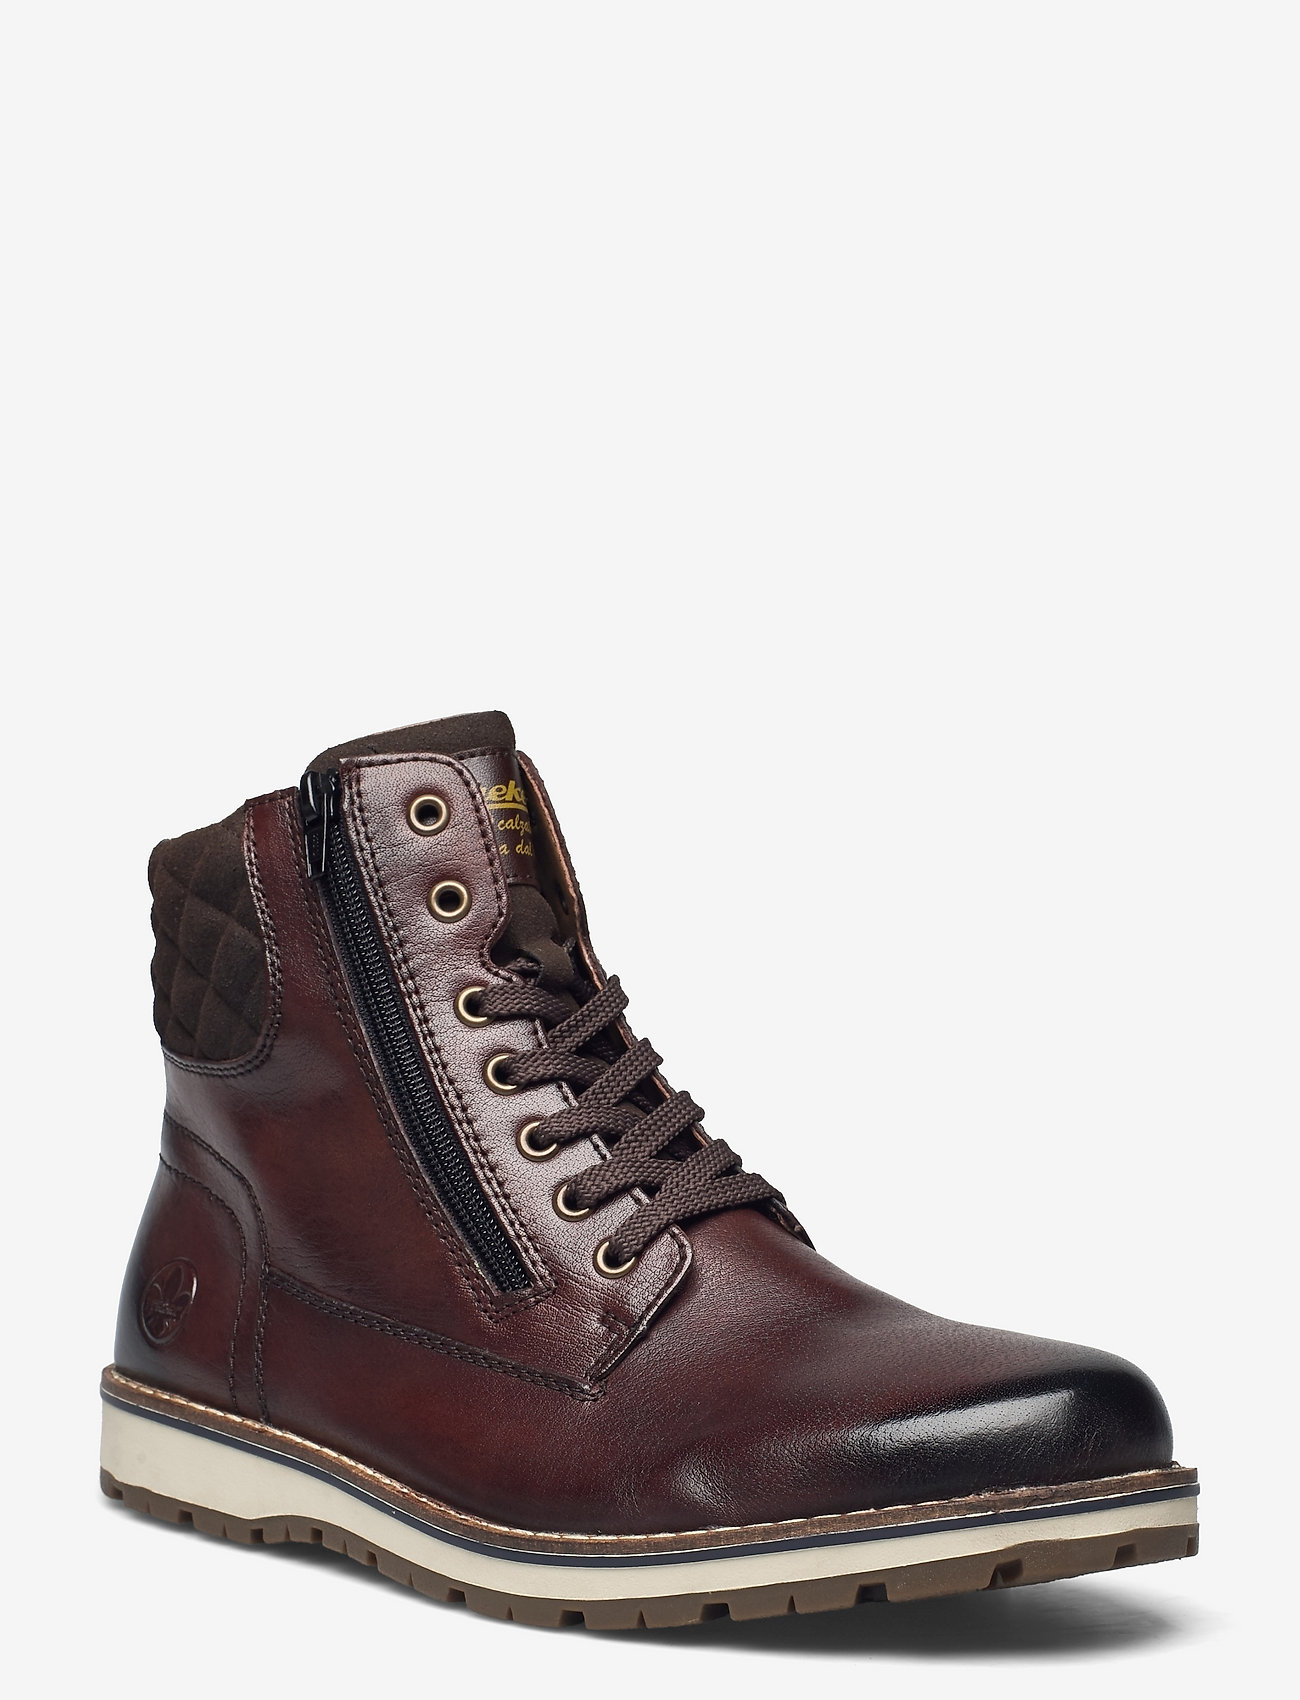 Rieker - Laced boots | Boozt.com